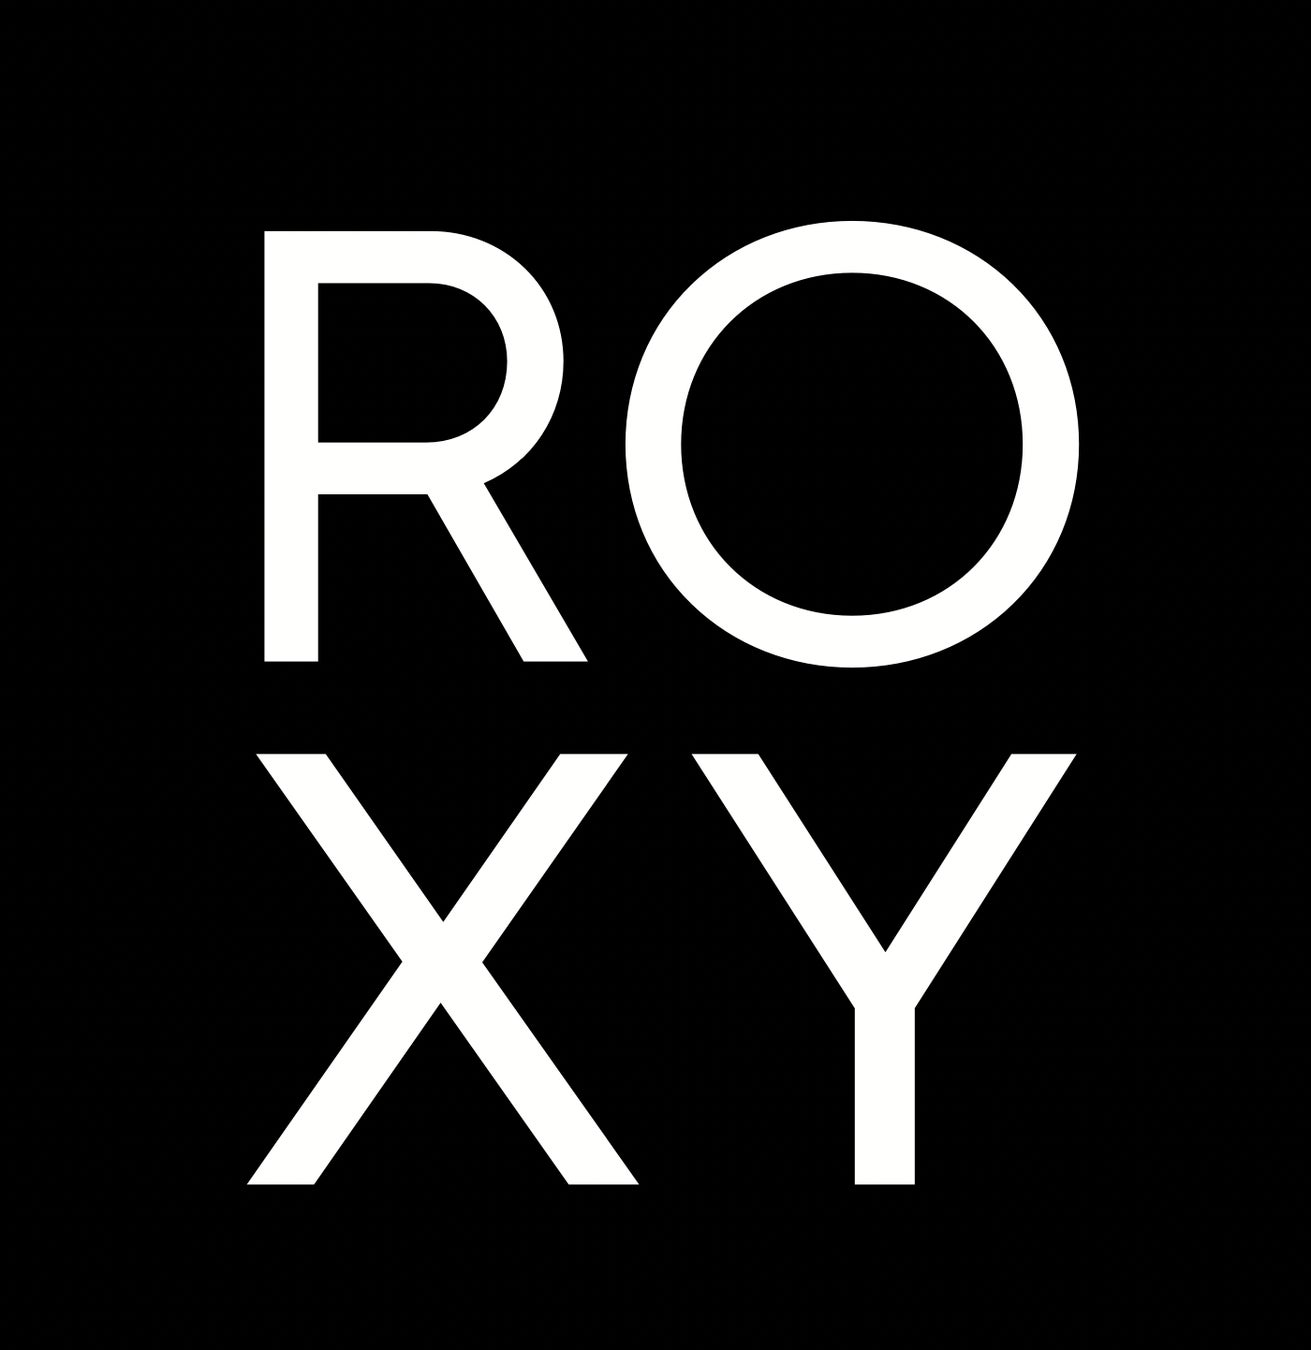 ROXY(ロキシー)が、話題の施設BPC(ボタニカルプールクラブ)で、新作ビキニを披露